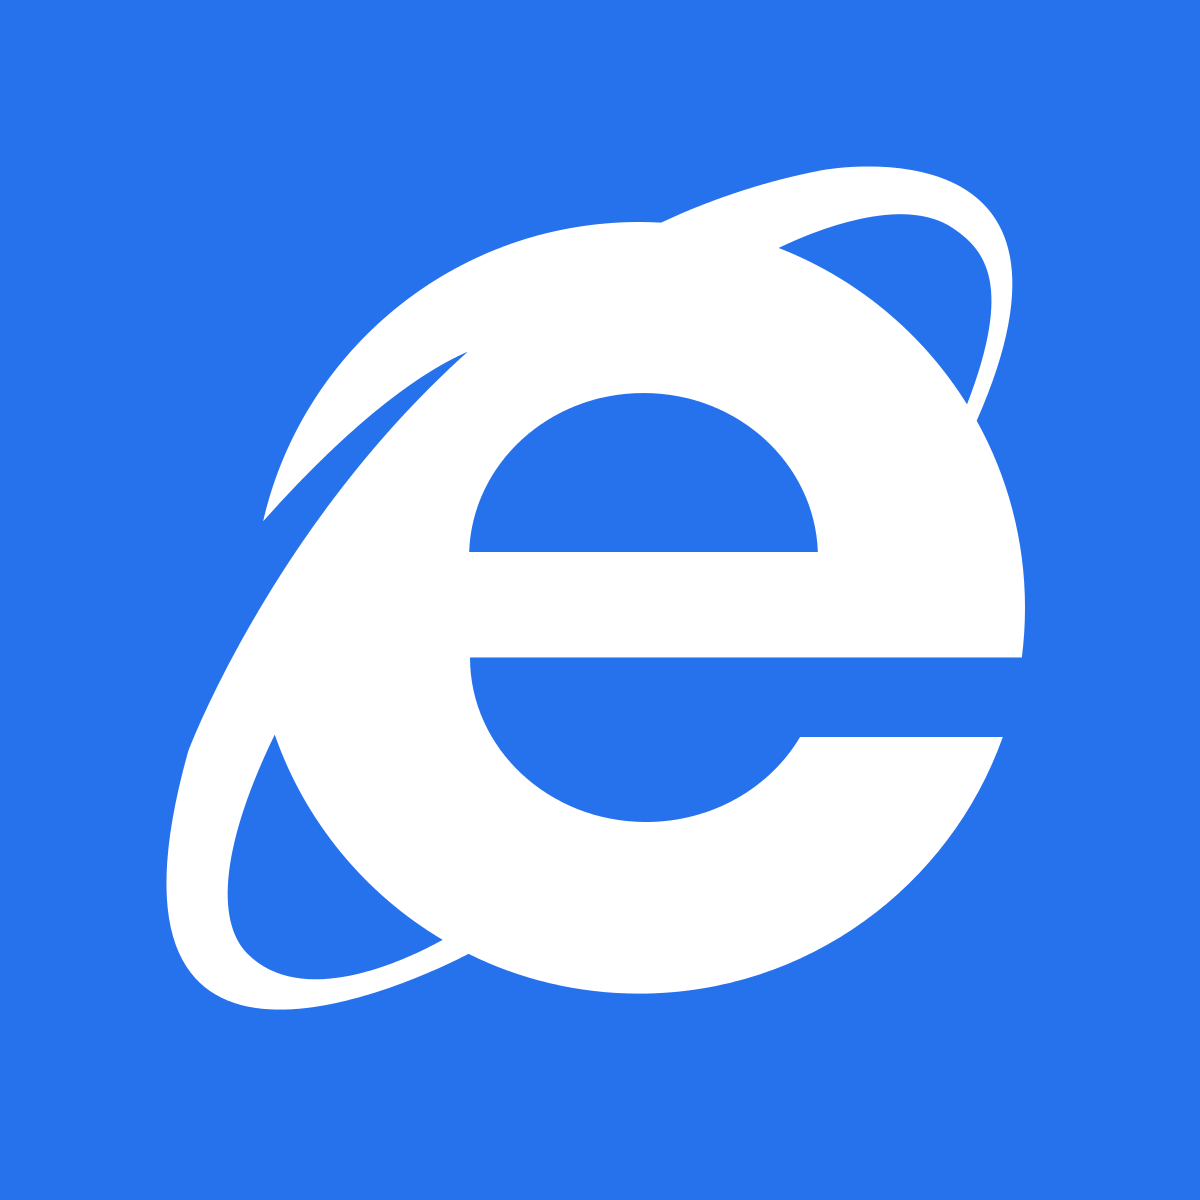 IE6 Logo - Internet Explorer Mobile